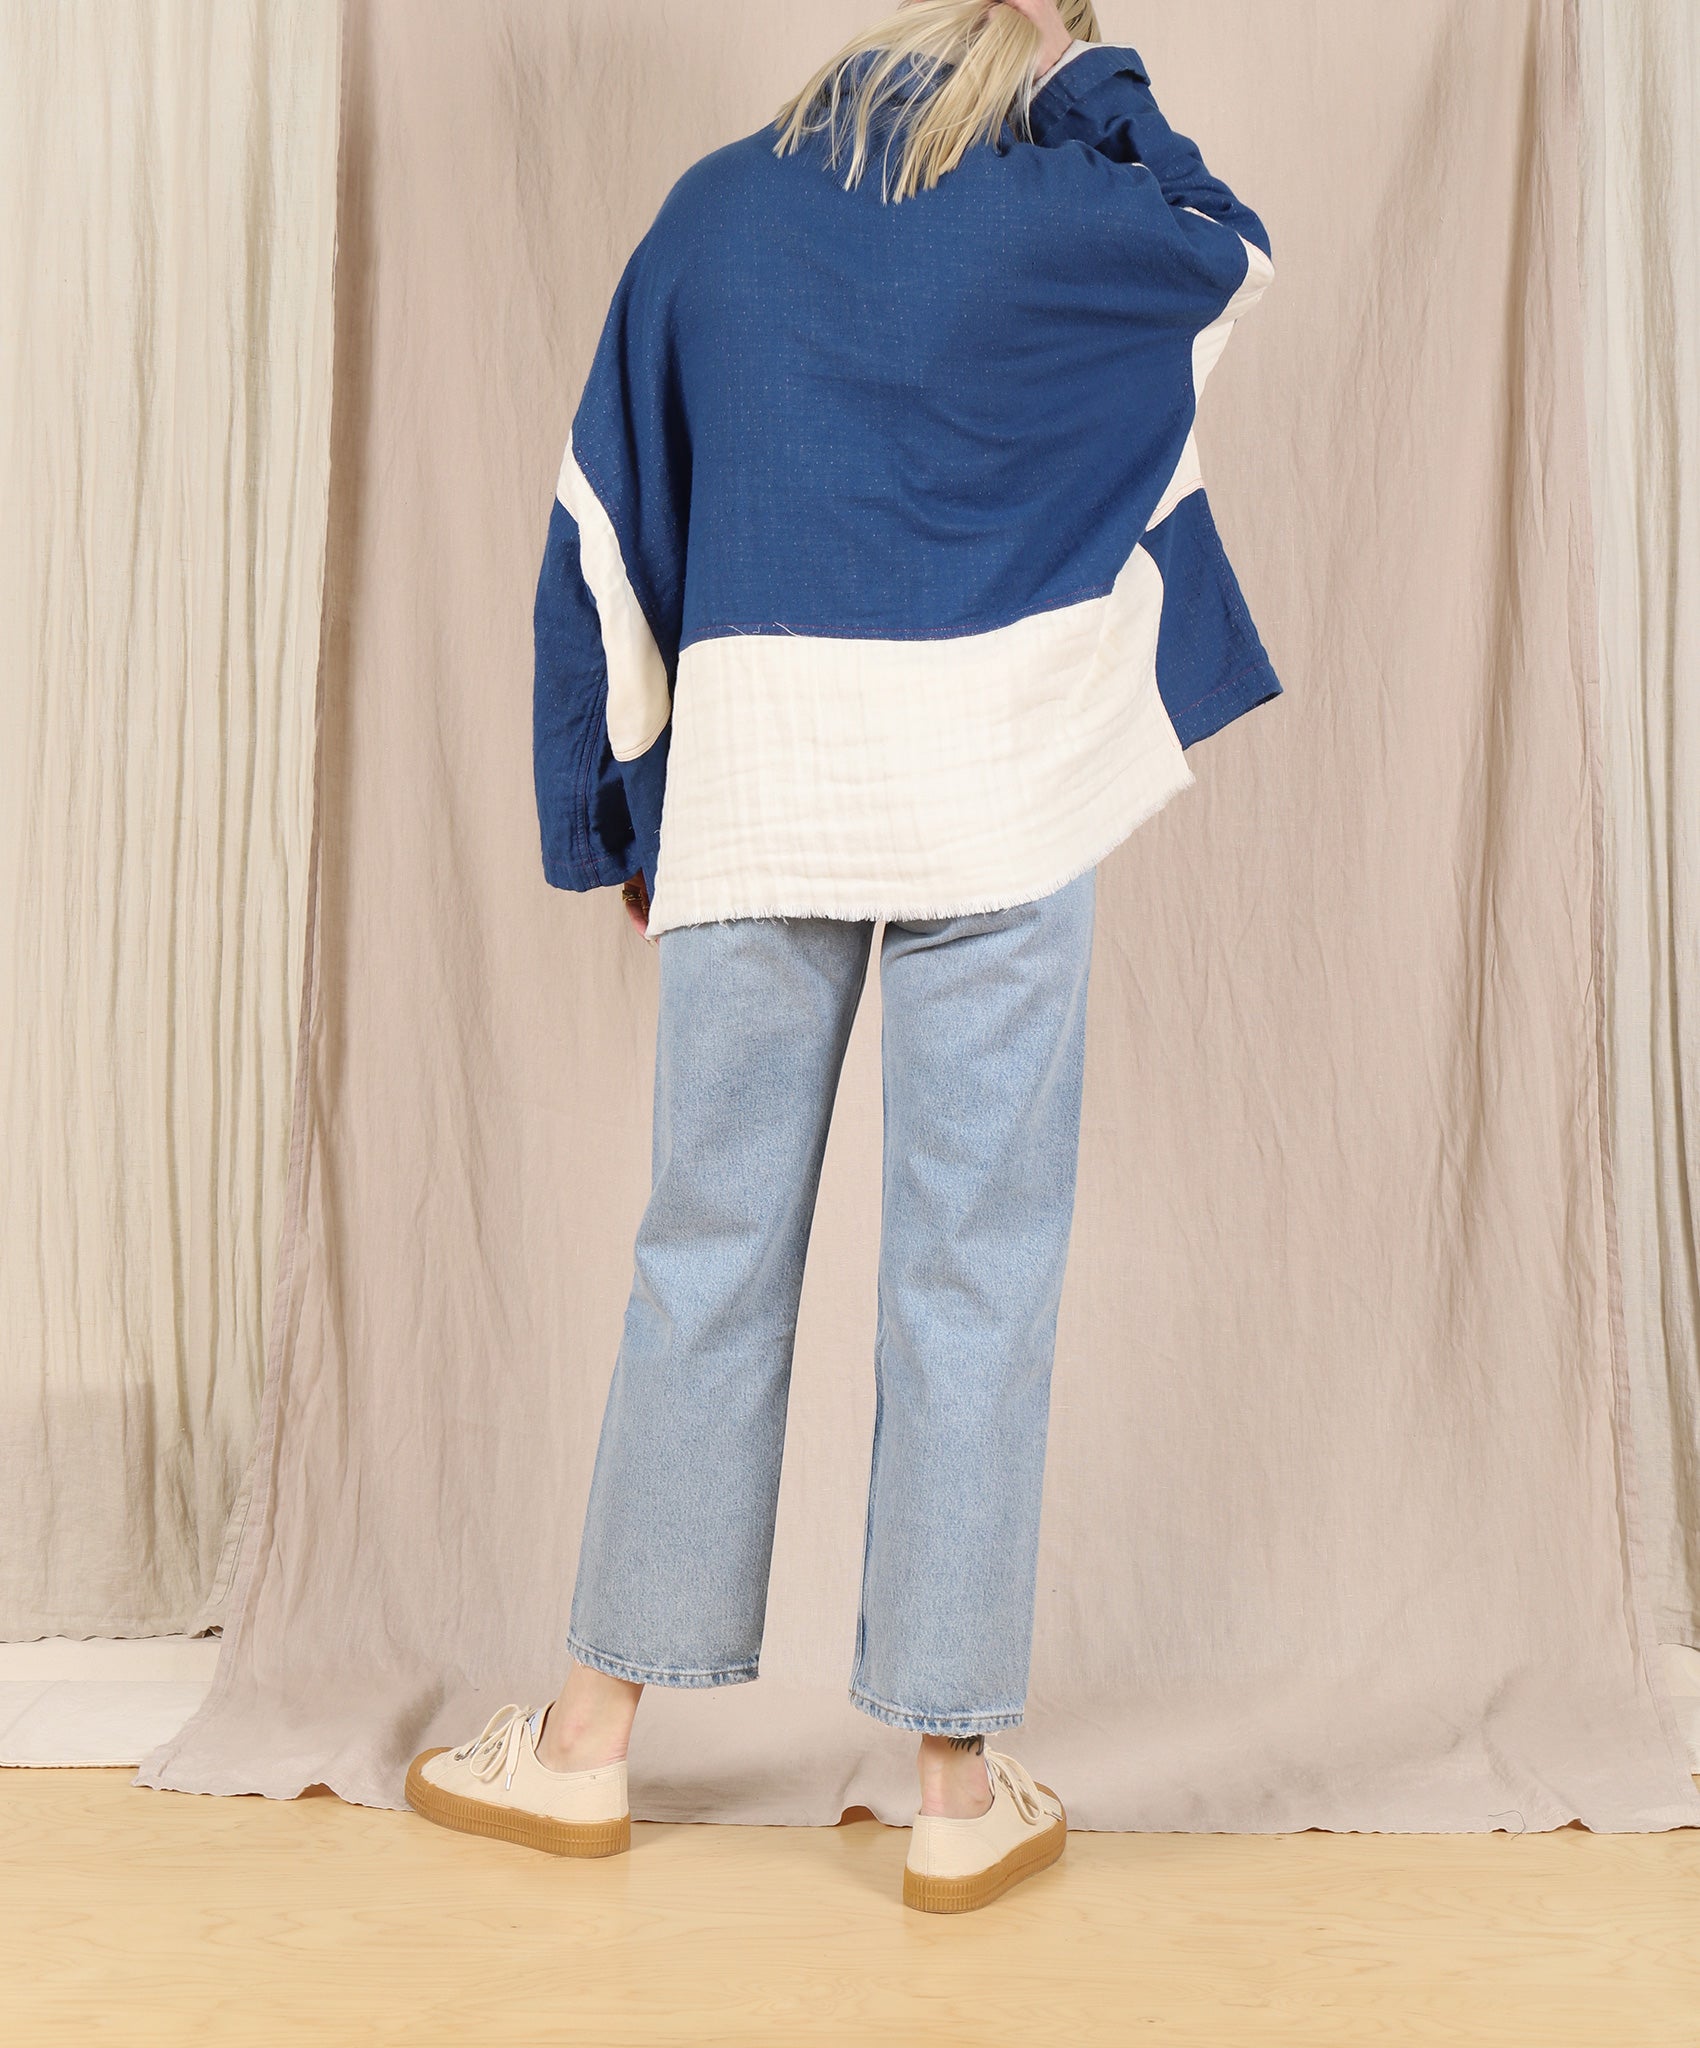 Atelier Delphine-Kimono 5 Layer Gauze // Blue + Cream